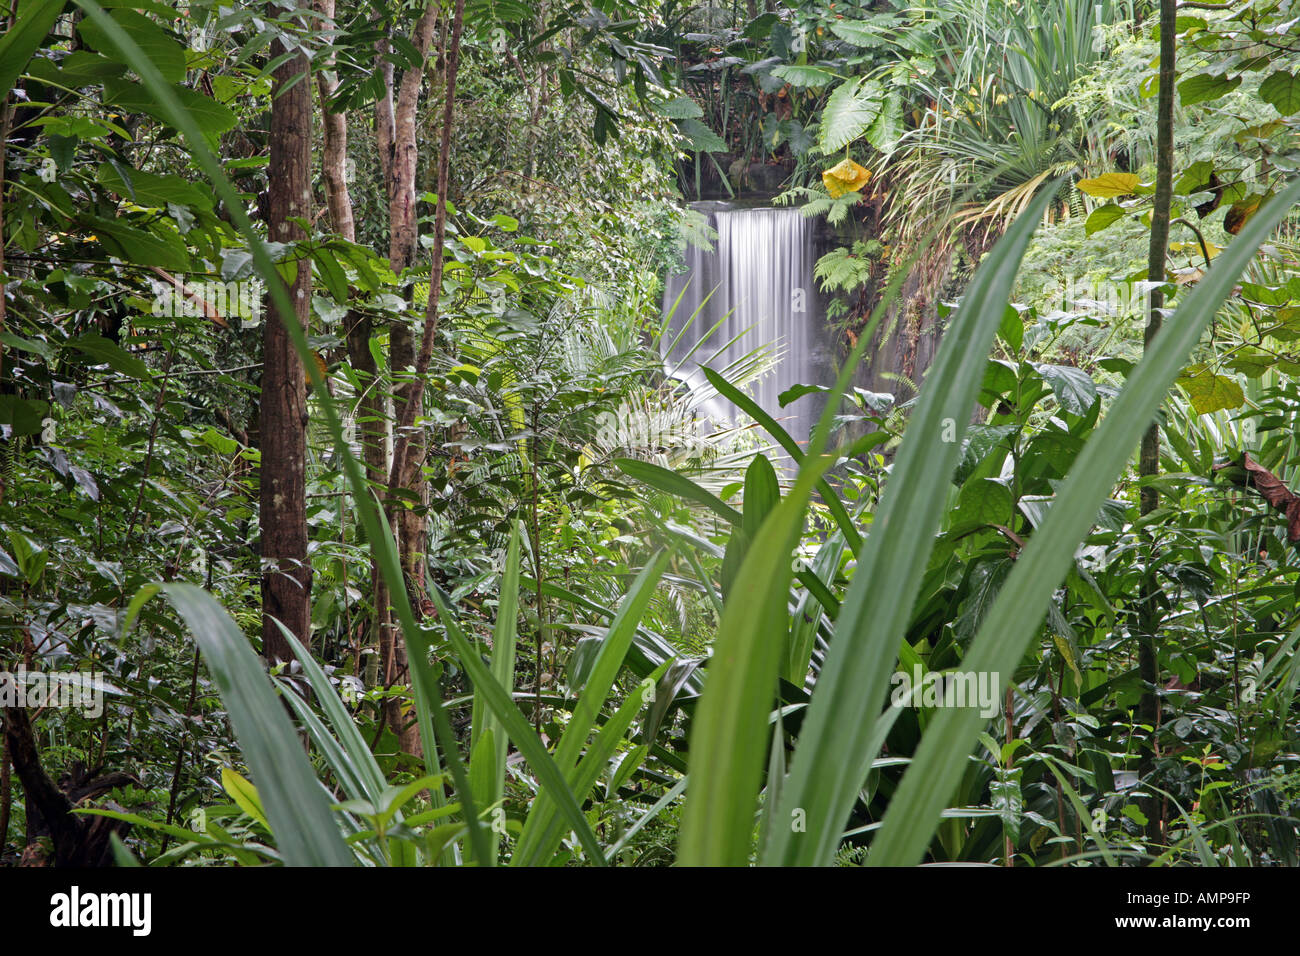 The waterfall in Masoala Rainforest Zurich Zoo Switzerland replica of a rainforest in Madagascar Stock Photo